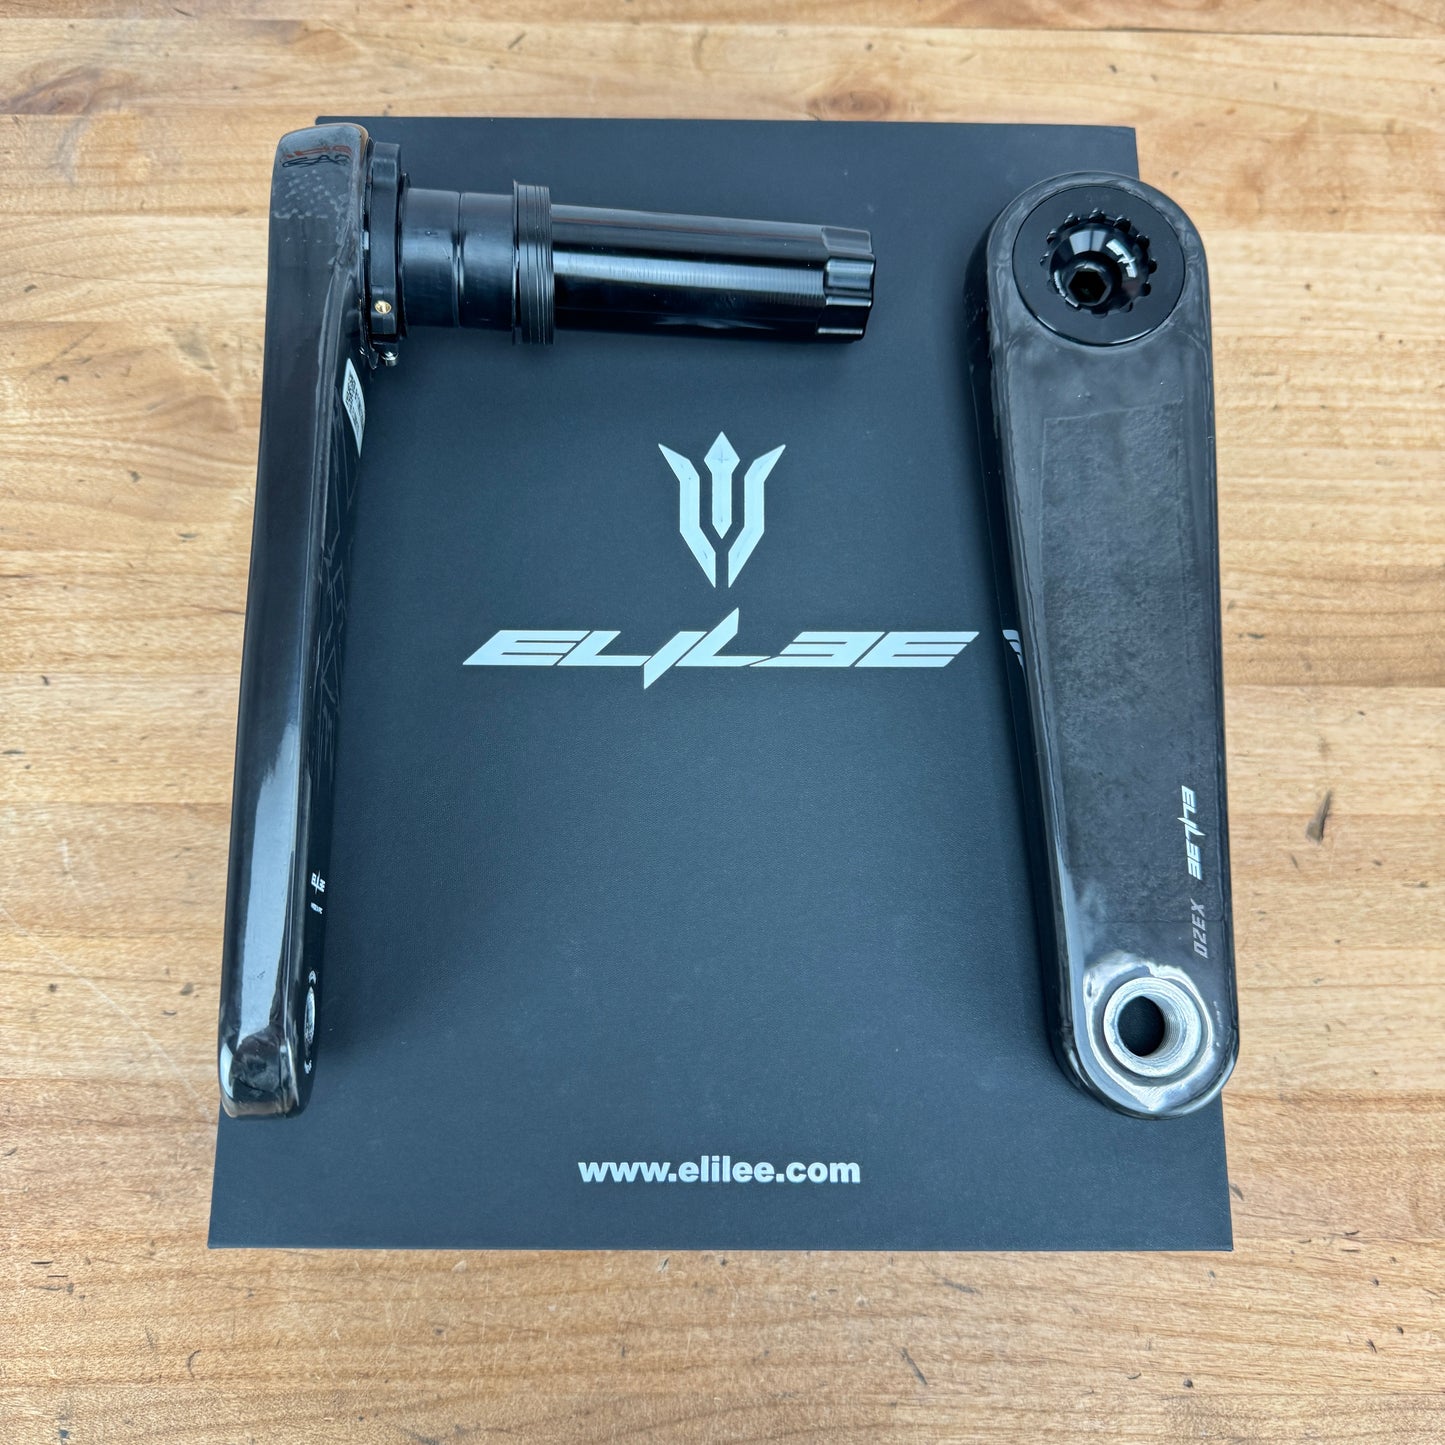 New! Elilee XXE X320 Carbon Bike Crank Arms 320g Easton Cinch Direct Mount